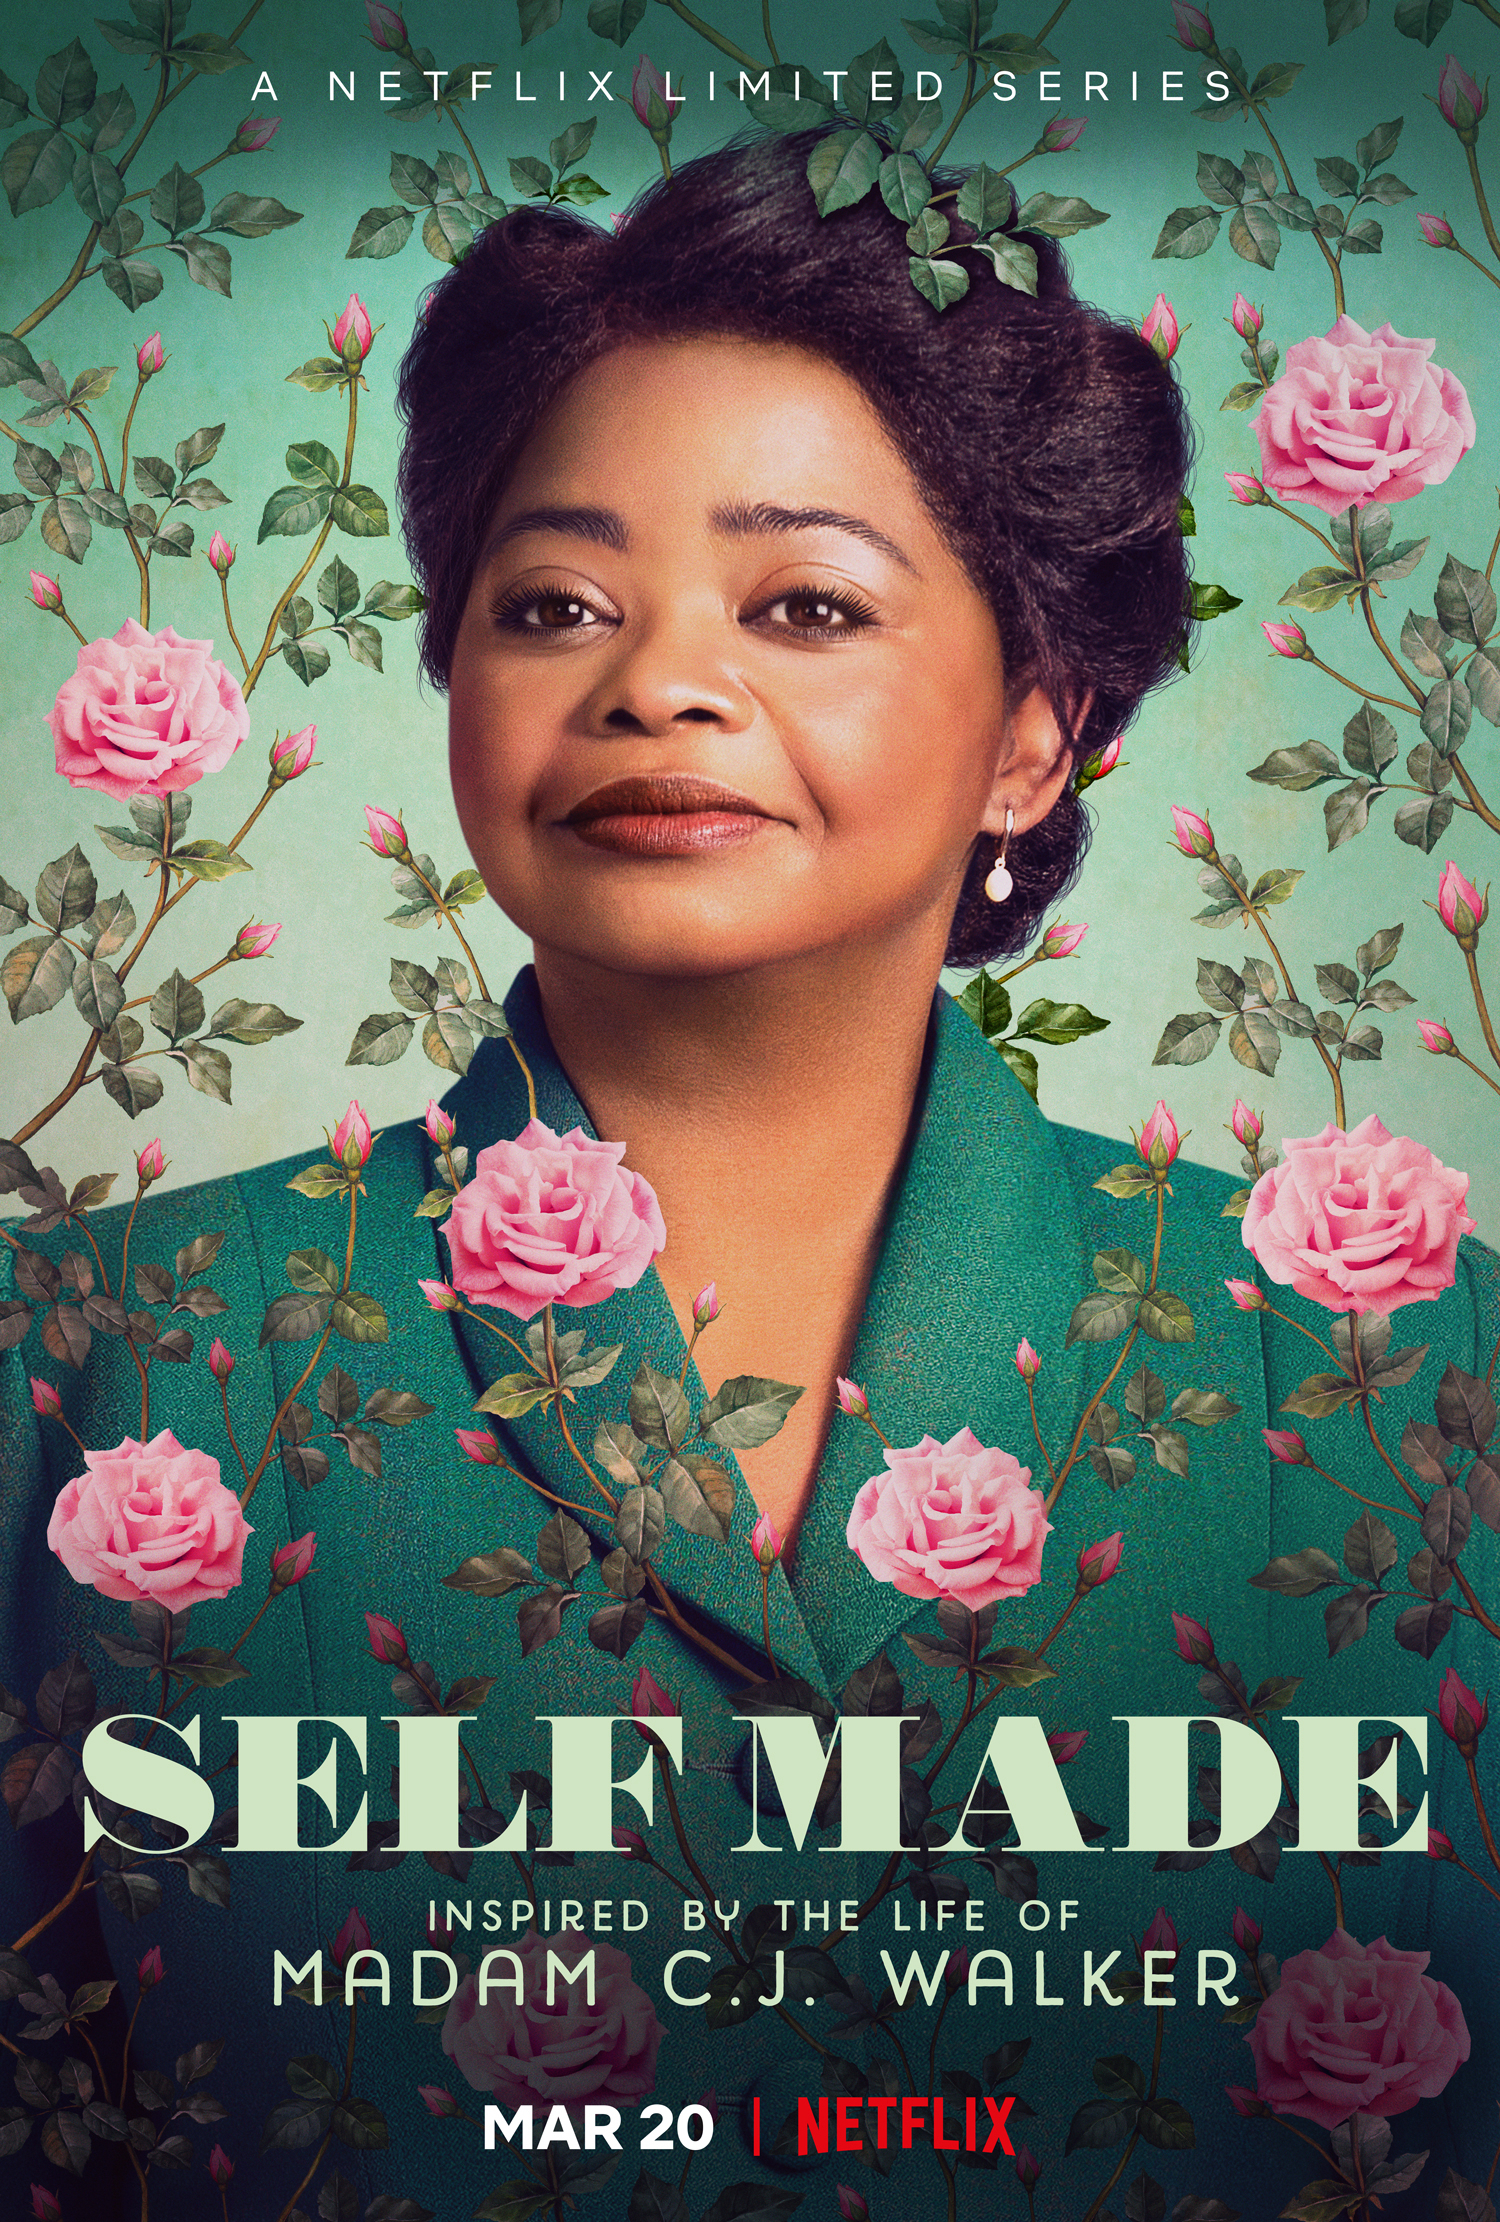 Poster Phim Triệu phú tự thân: Cuộc đời Madam C.J. Walker (Self Made: Inspired by the Life of Madam C.J. Walker)